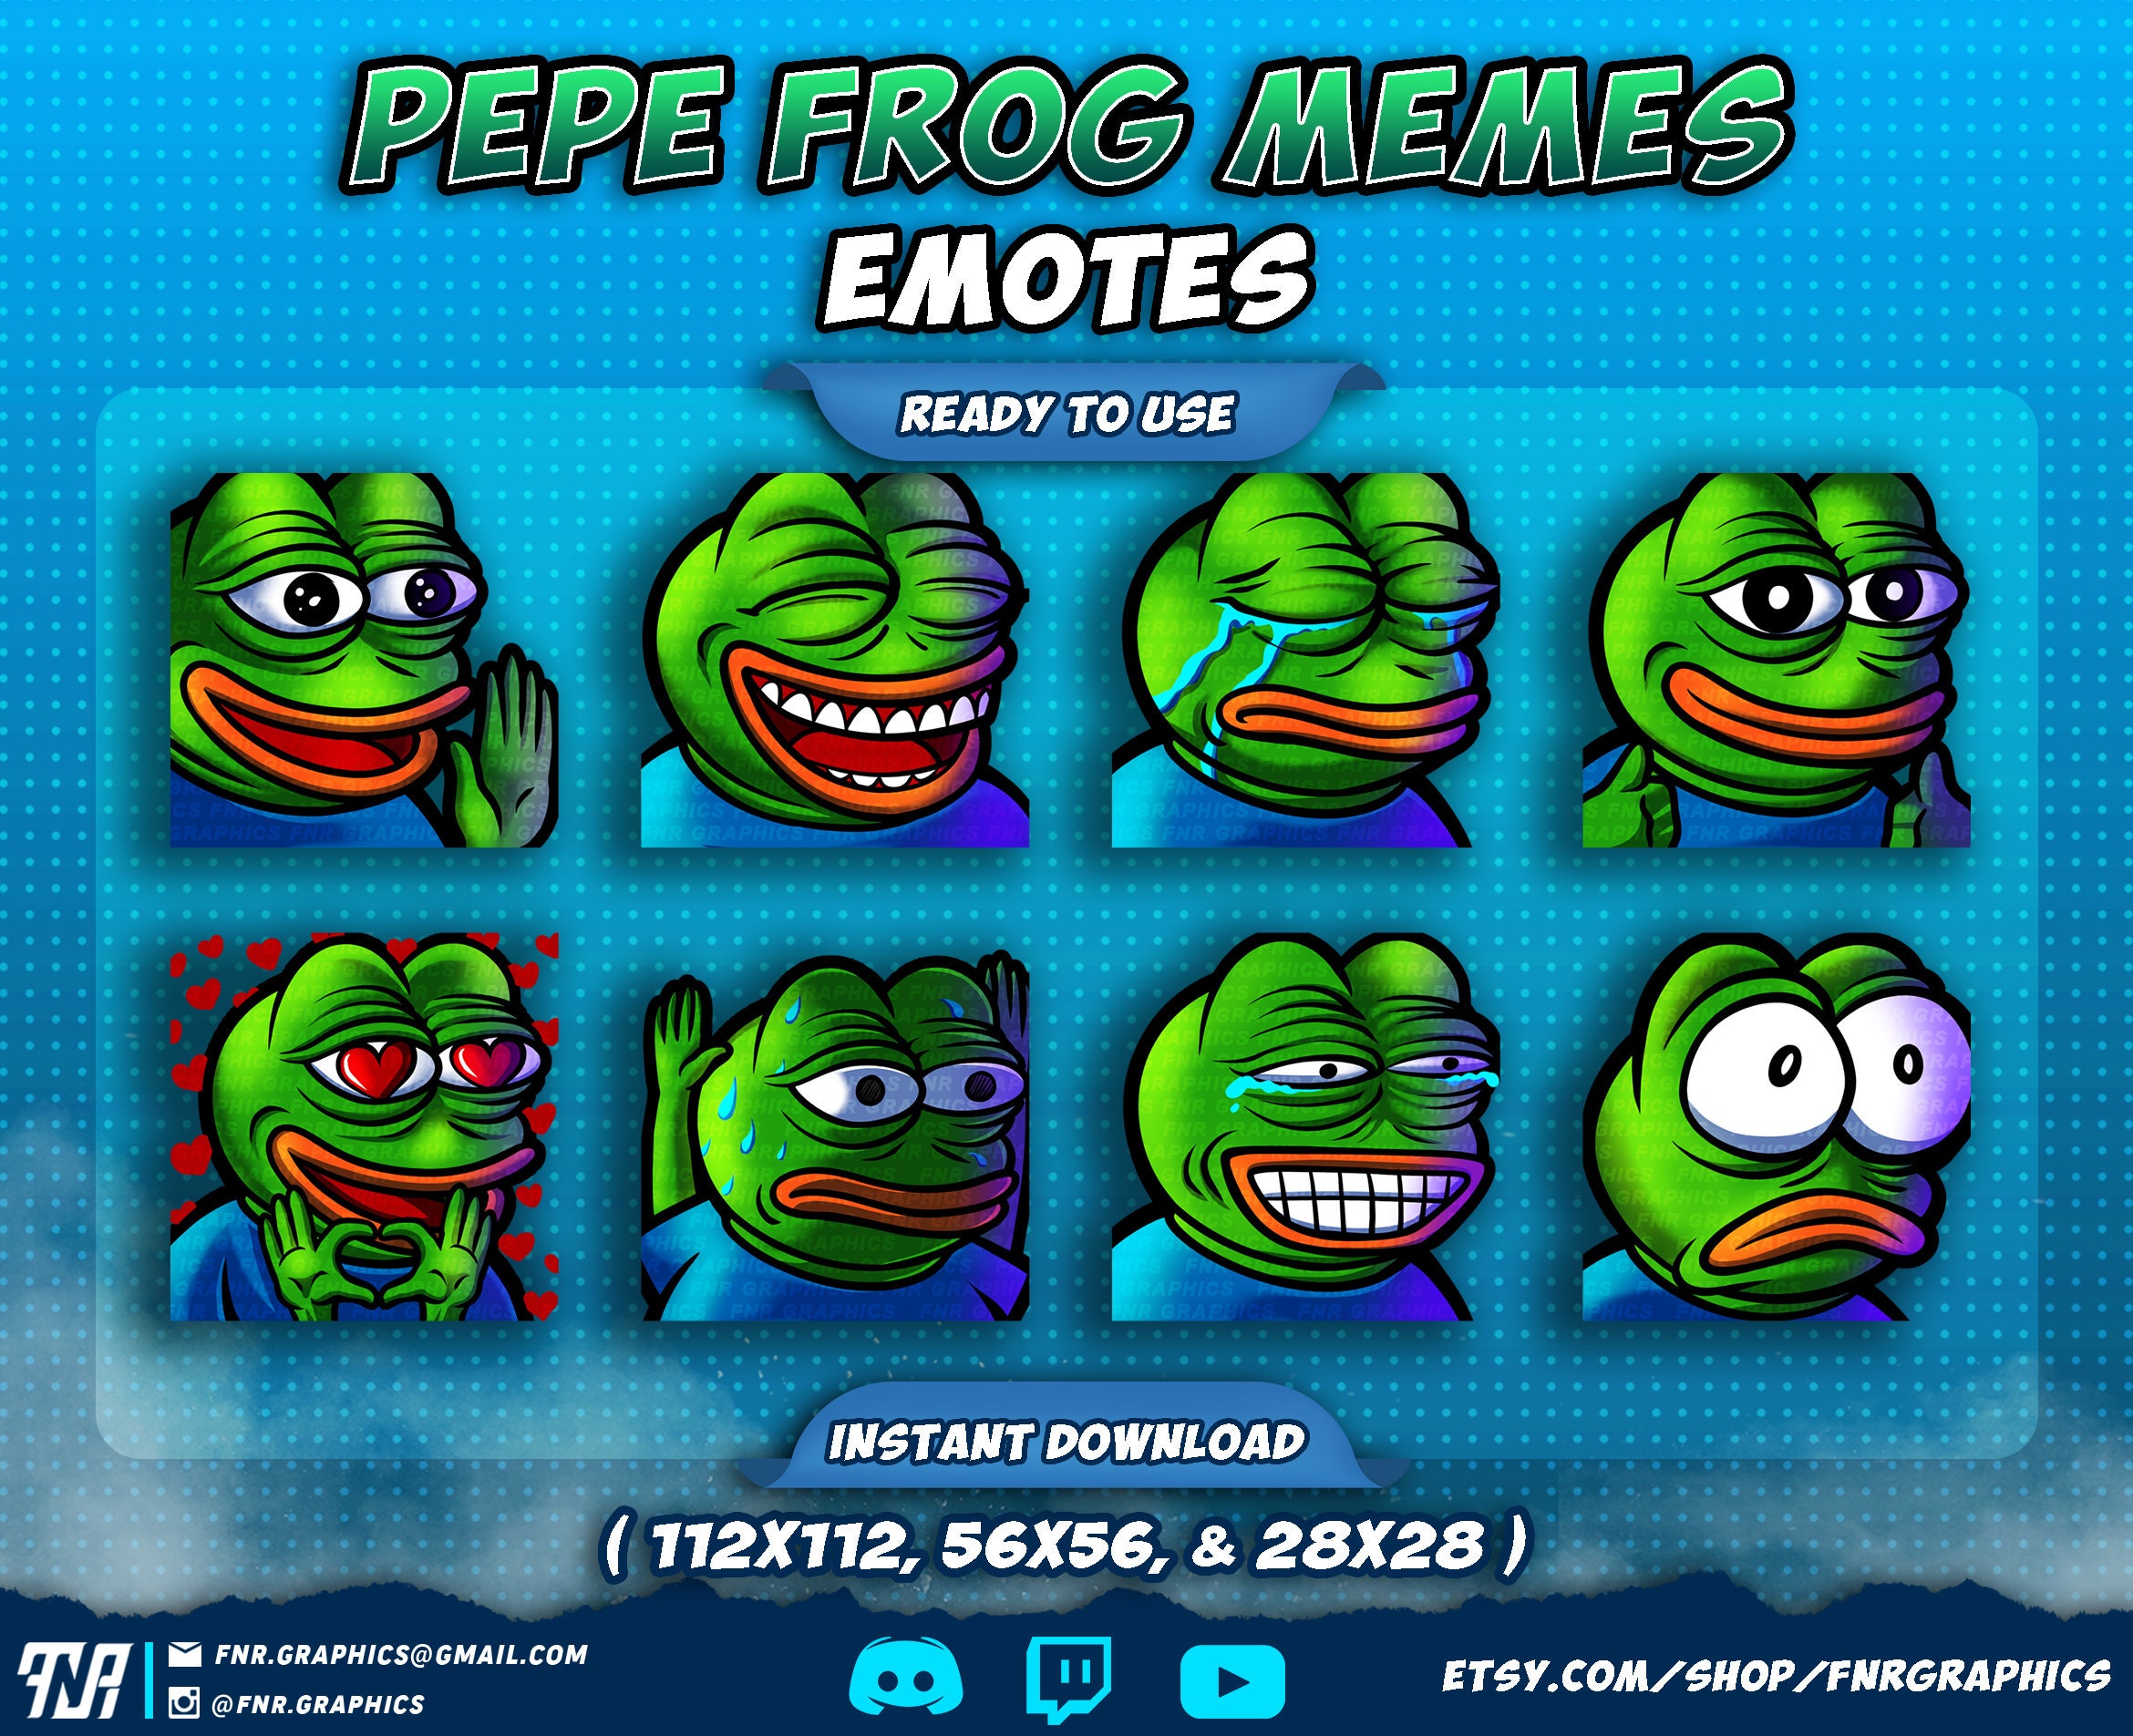 Loba Pepega, Pepe Apex Legends Pepe Twitch Emotes, Chibi Twitch Emotes,  Pepe Frog Pepega Meme Twitch Emotes by Cairoz Creative